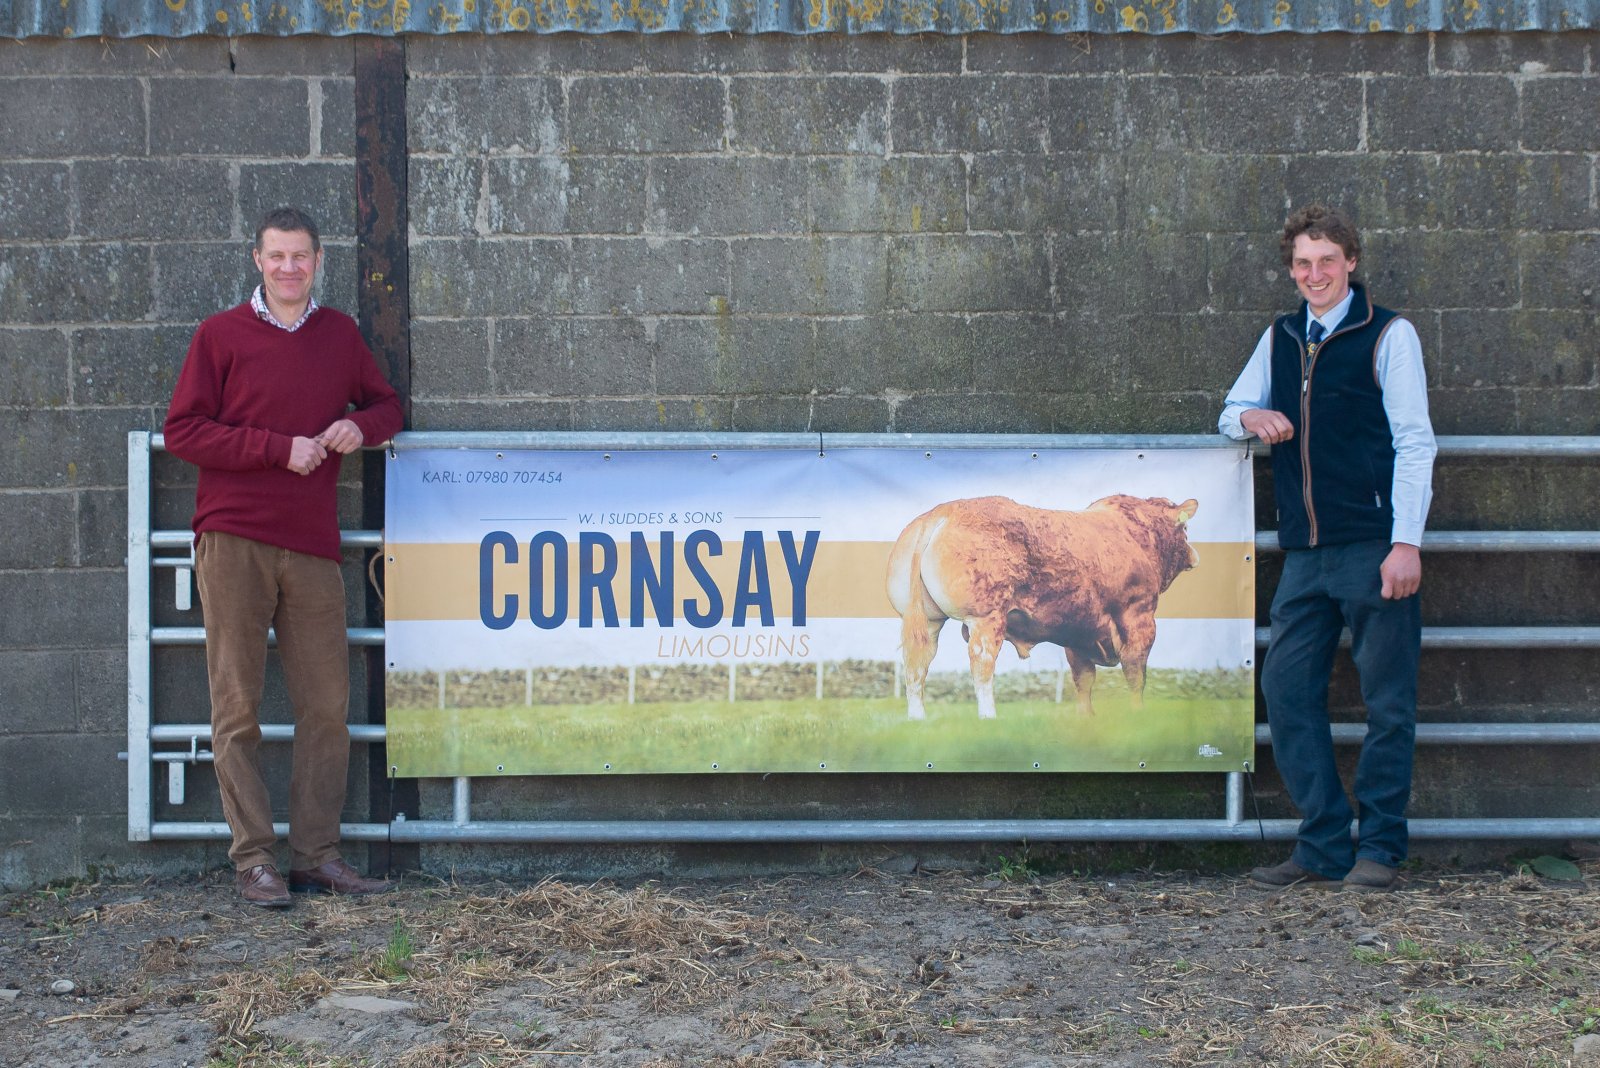 South Farm, Cornsay, courtesy of the Suddes family